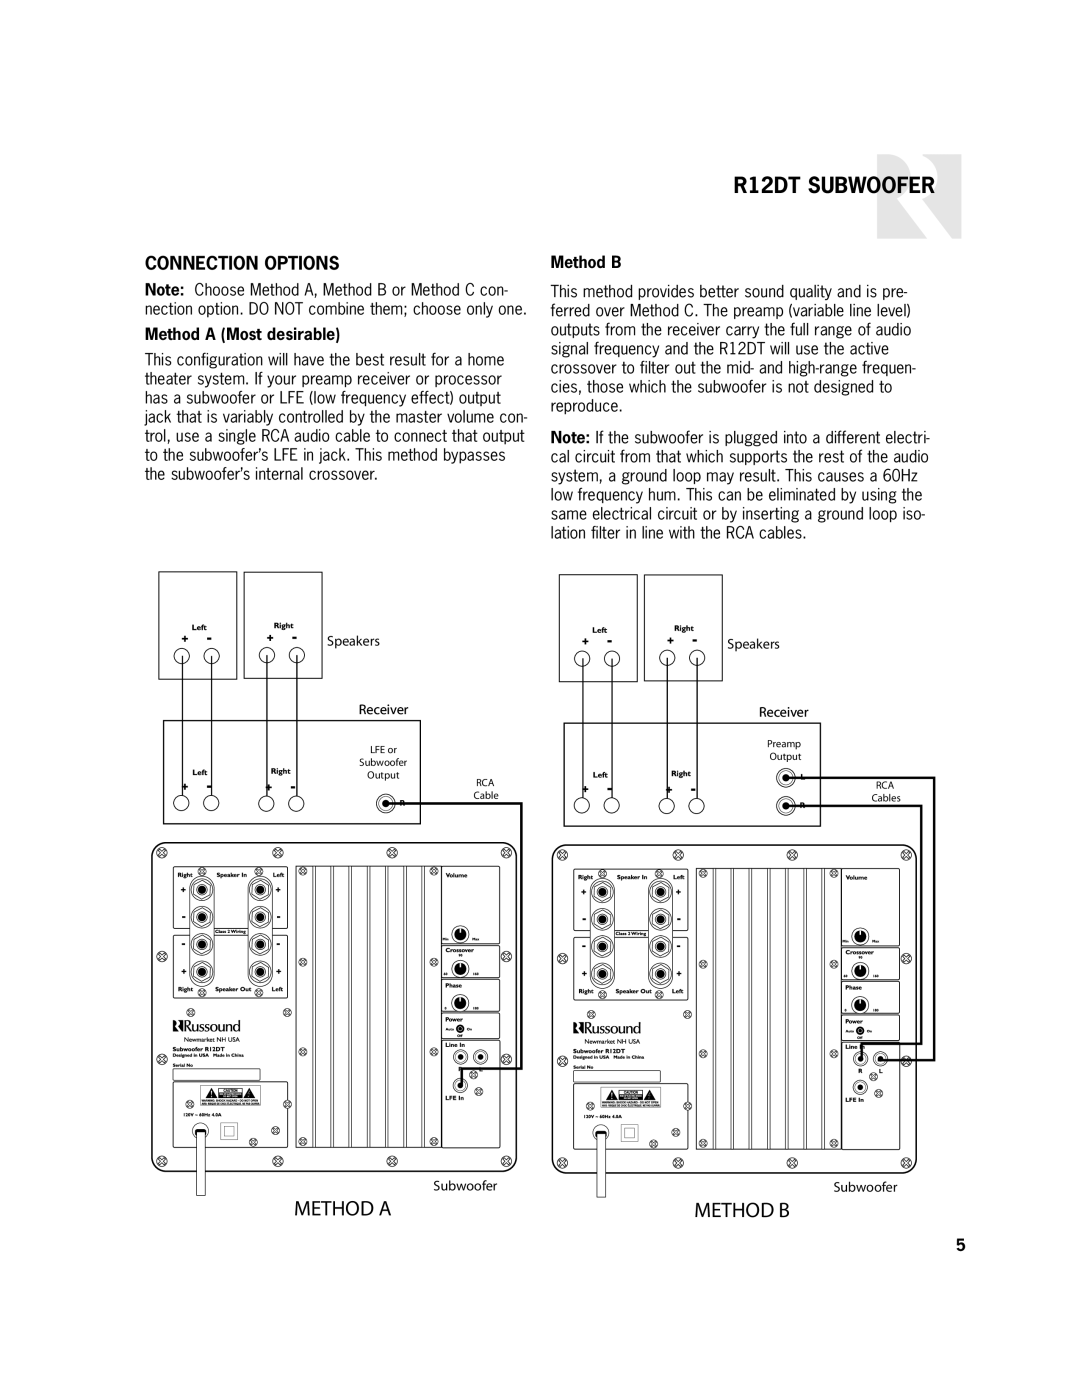 Russound user manual Connection Options, R12DT SUBWOOFER, Method A, Method B 